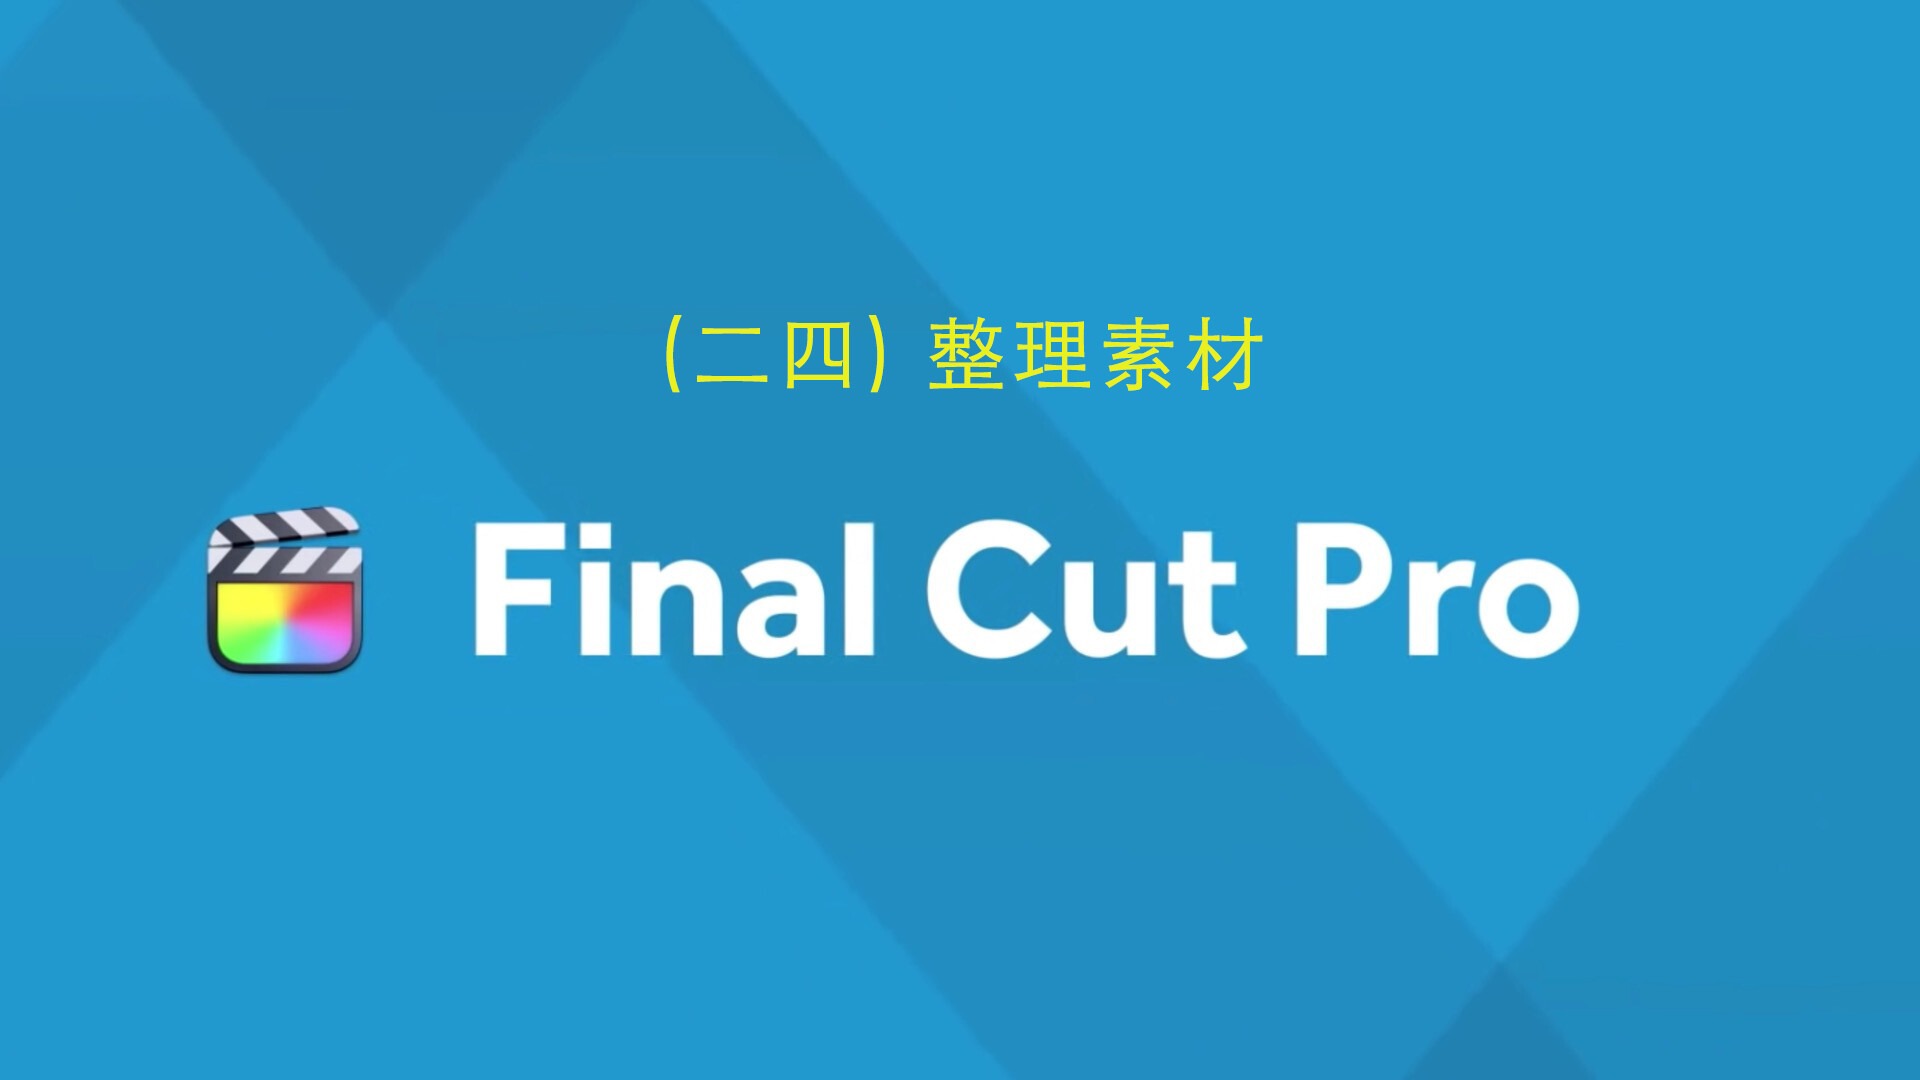 Final Cut Pro中文新手教程 (24) 整理素材